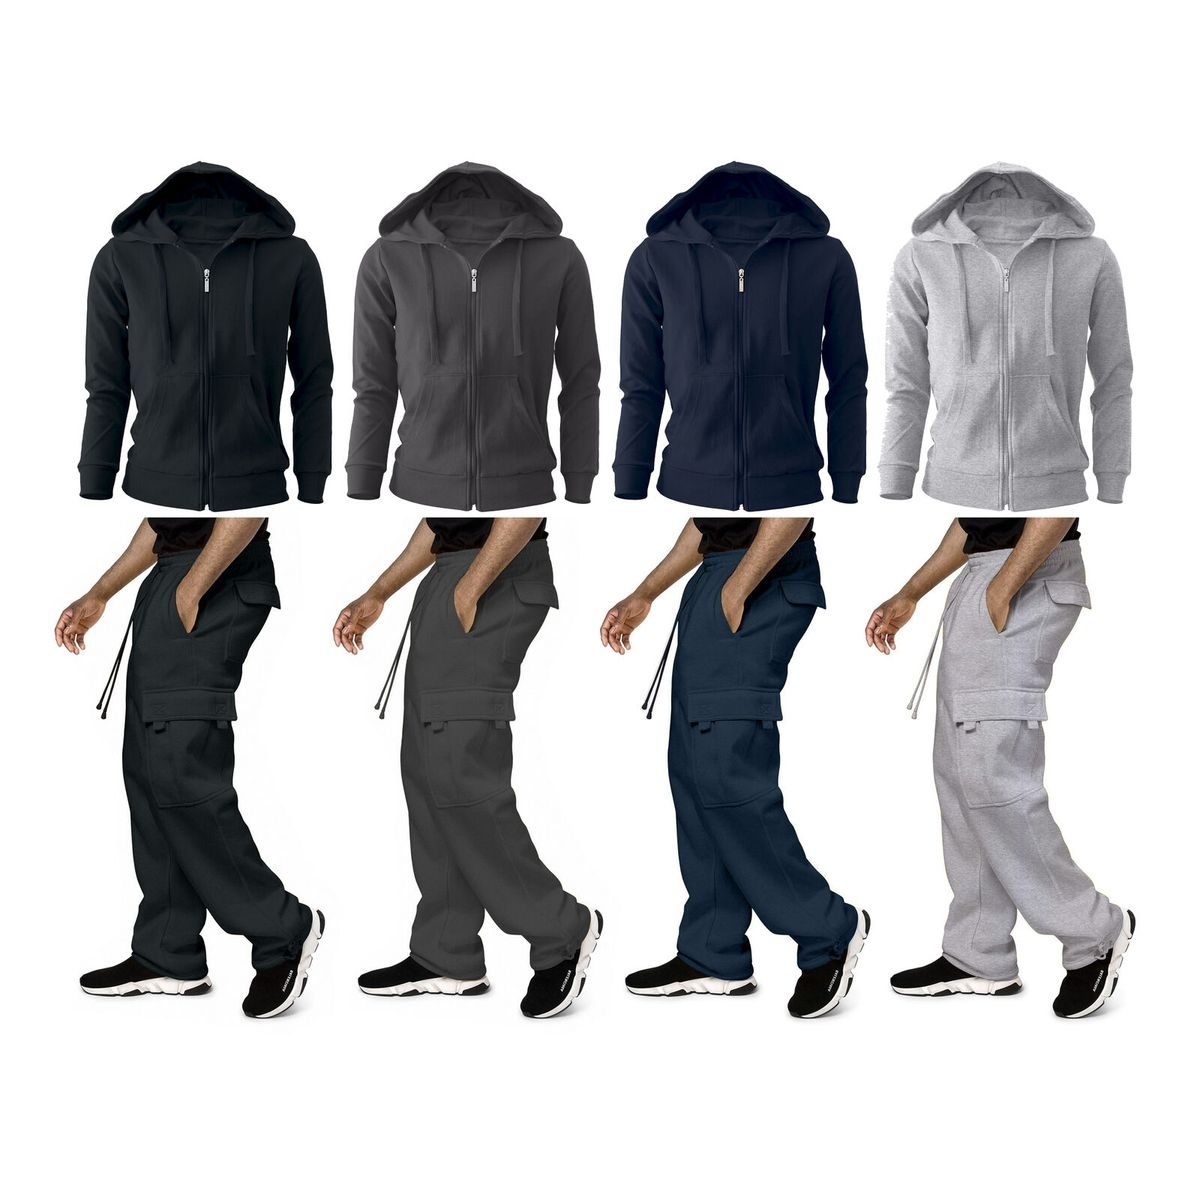 Multi-Pack: Men's Big & Tall Winter Warm Athletic Active Cozy Fleece Lined Multi-Pocket Full Zip Up Cargo Tracksuit - Grey, 2-pack, Medium